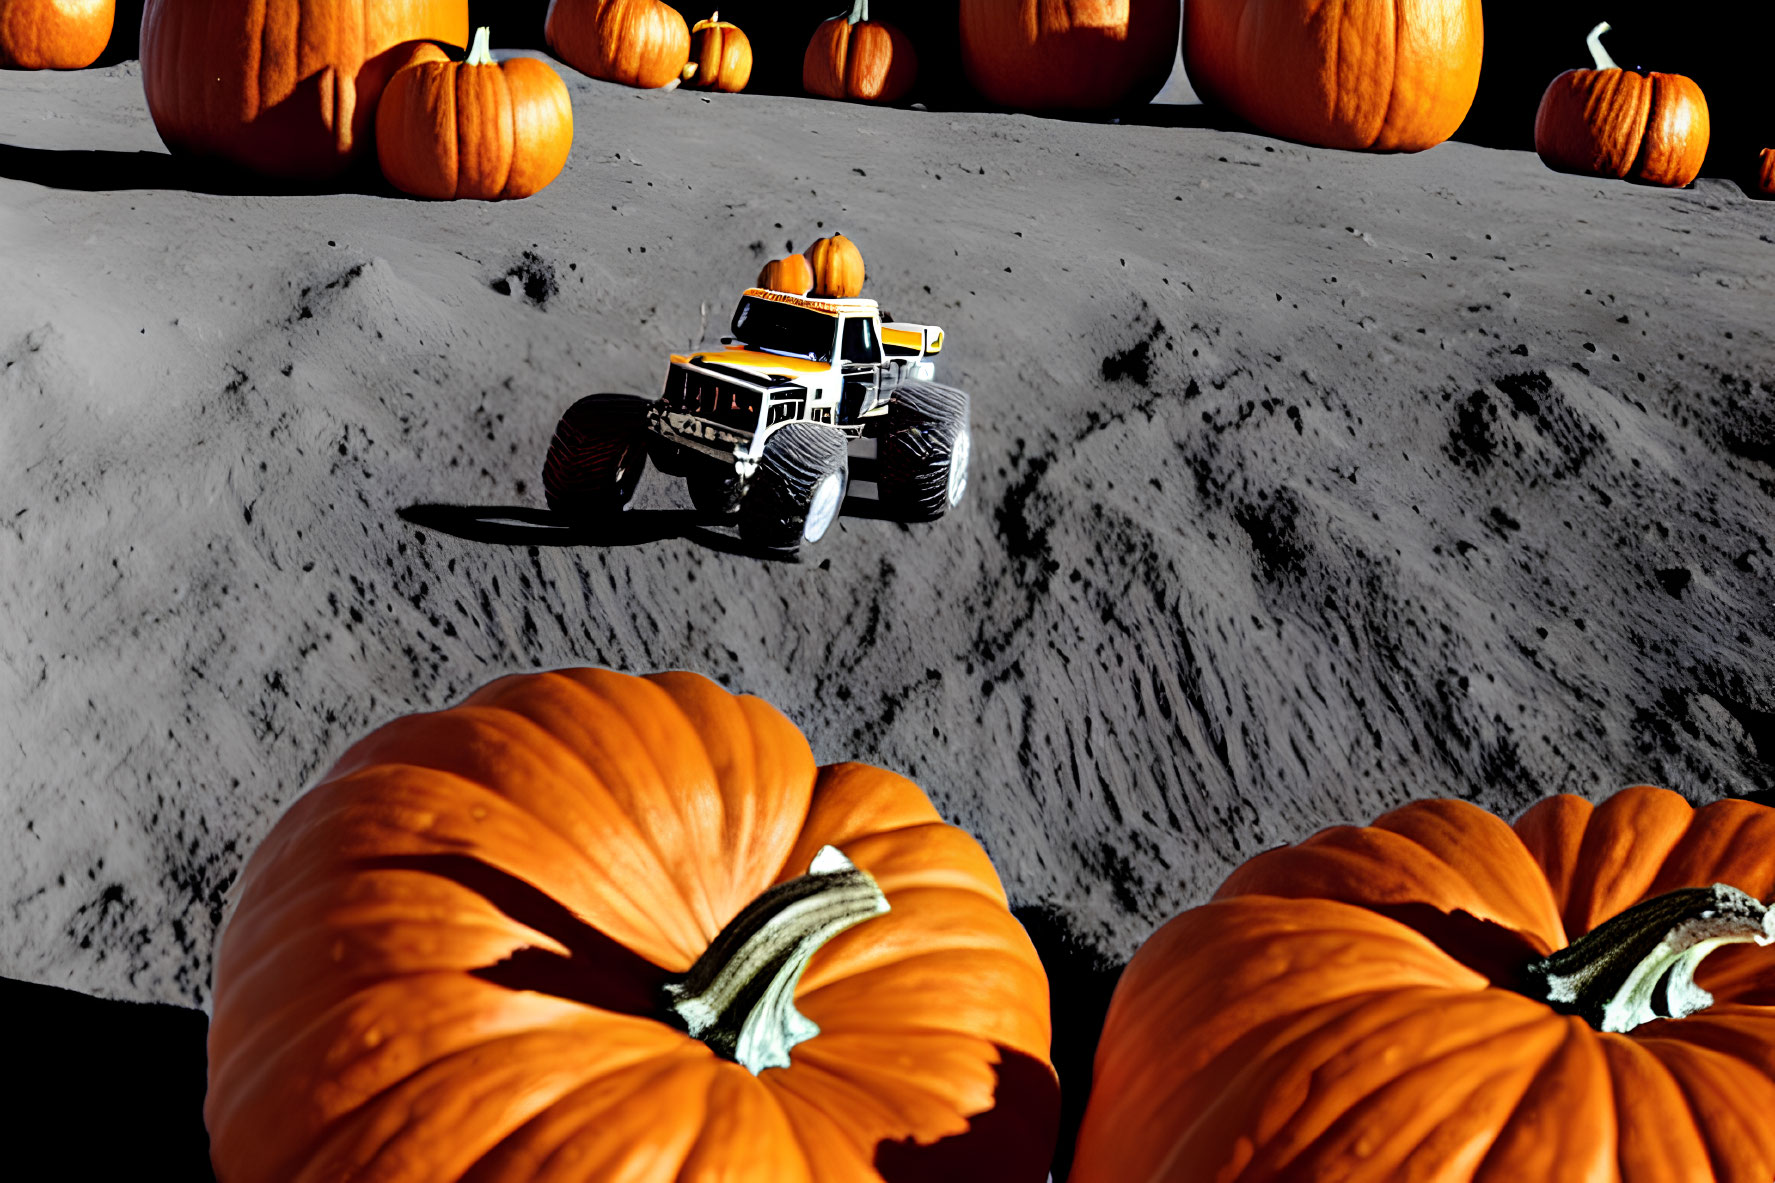 Surreal lunar rover among pumpkins on moon-like terrain